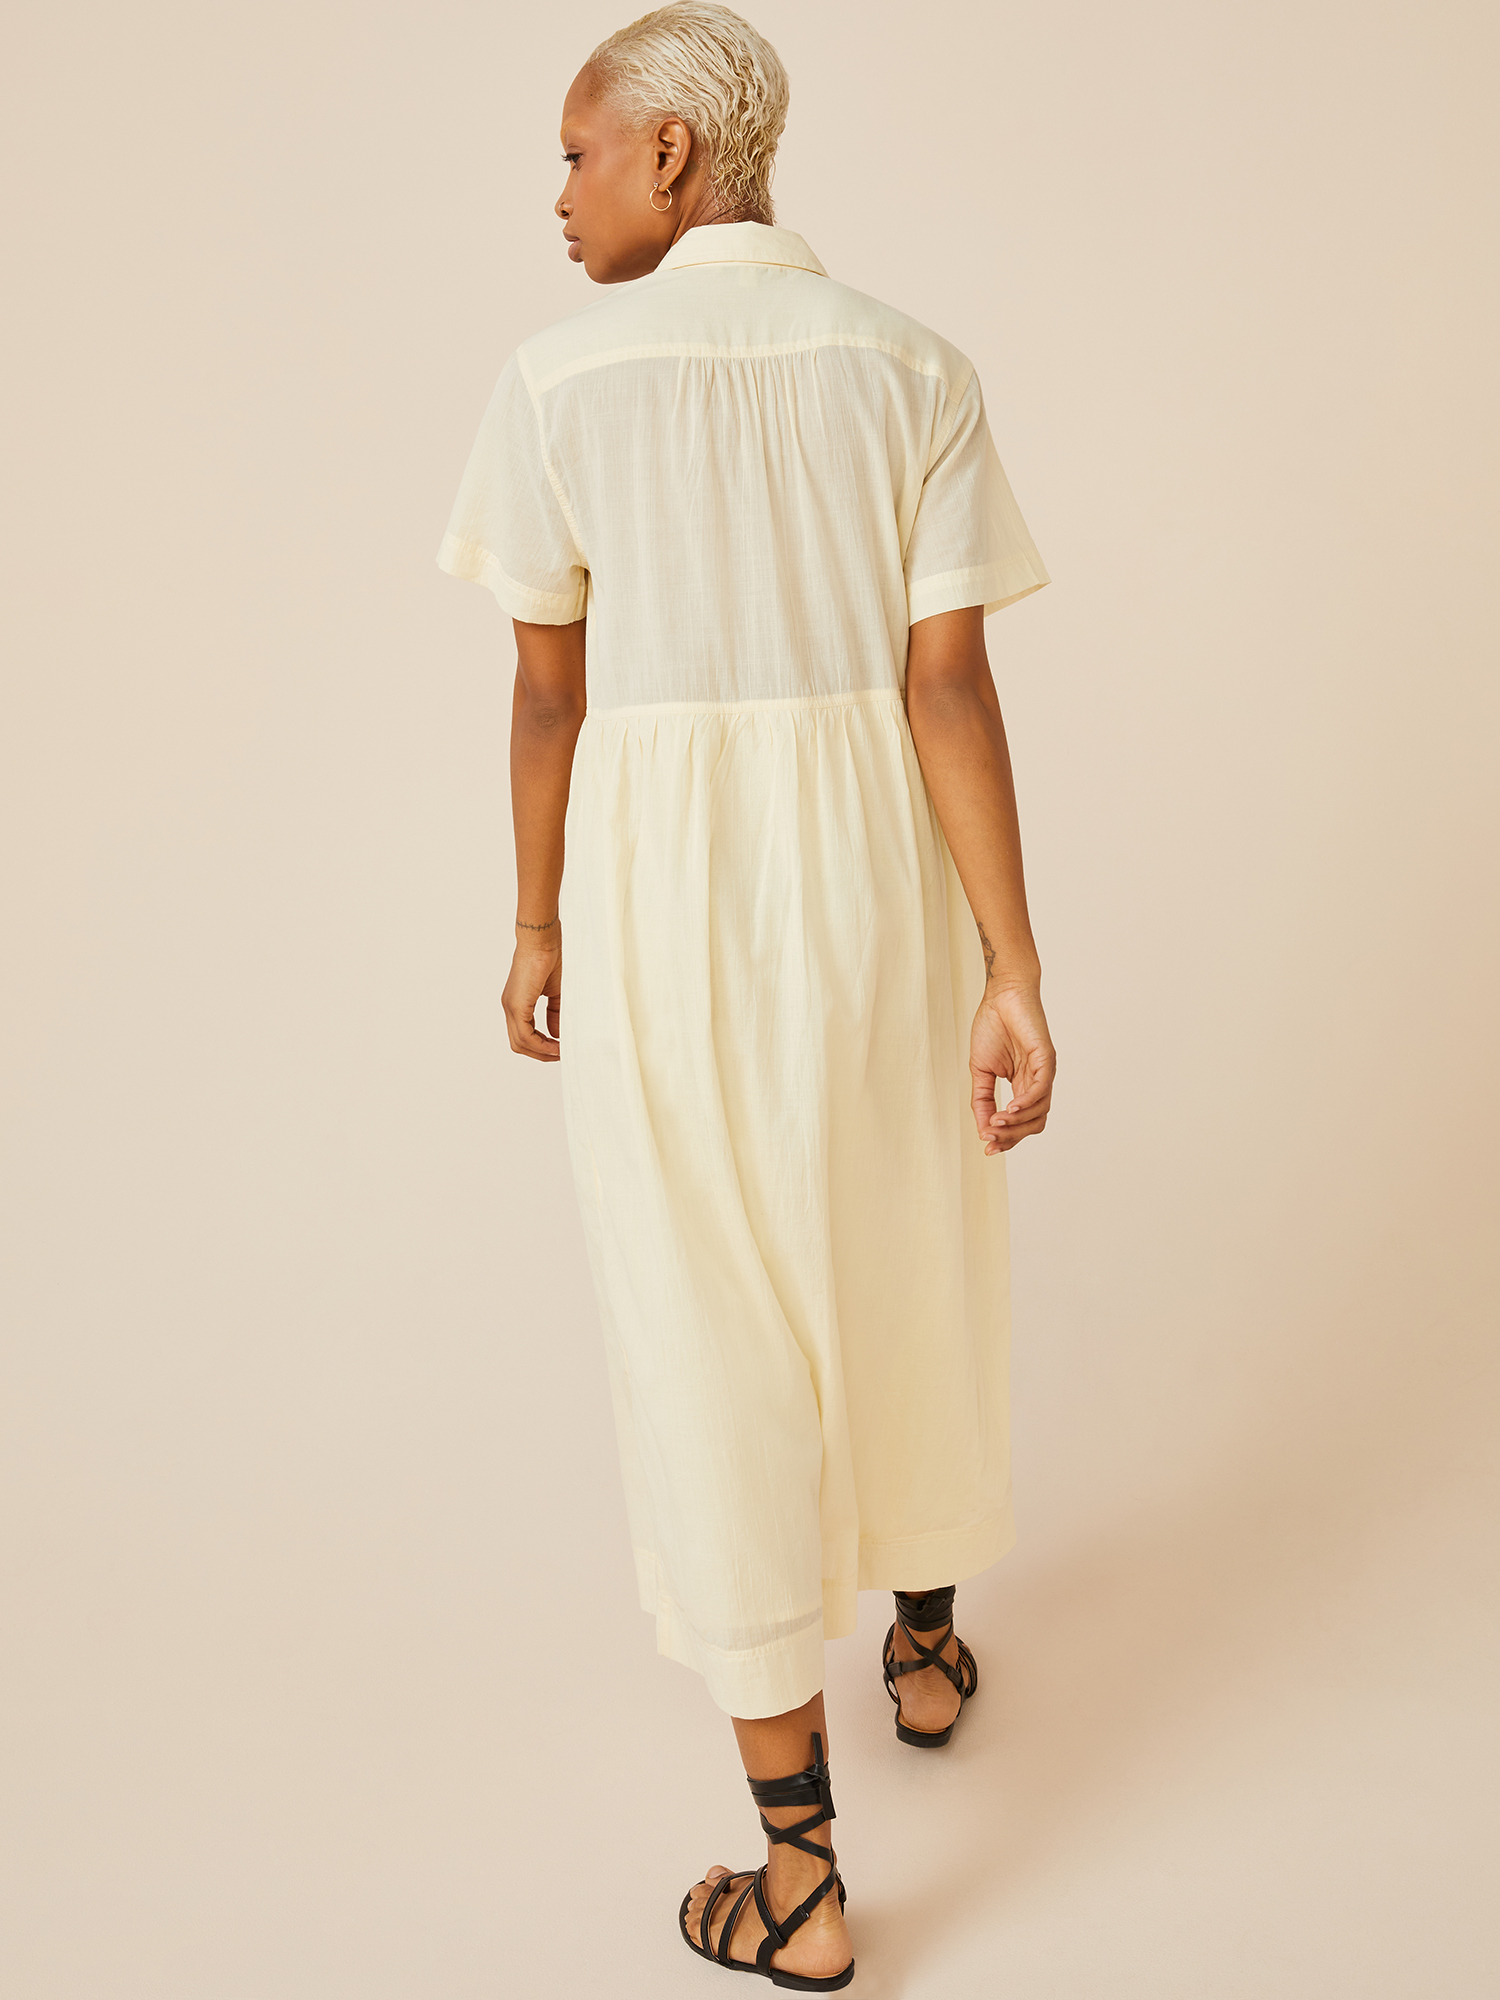 Free Assembly Women’s Short Sleeve Maxi Shirtdress - image 3 of 6